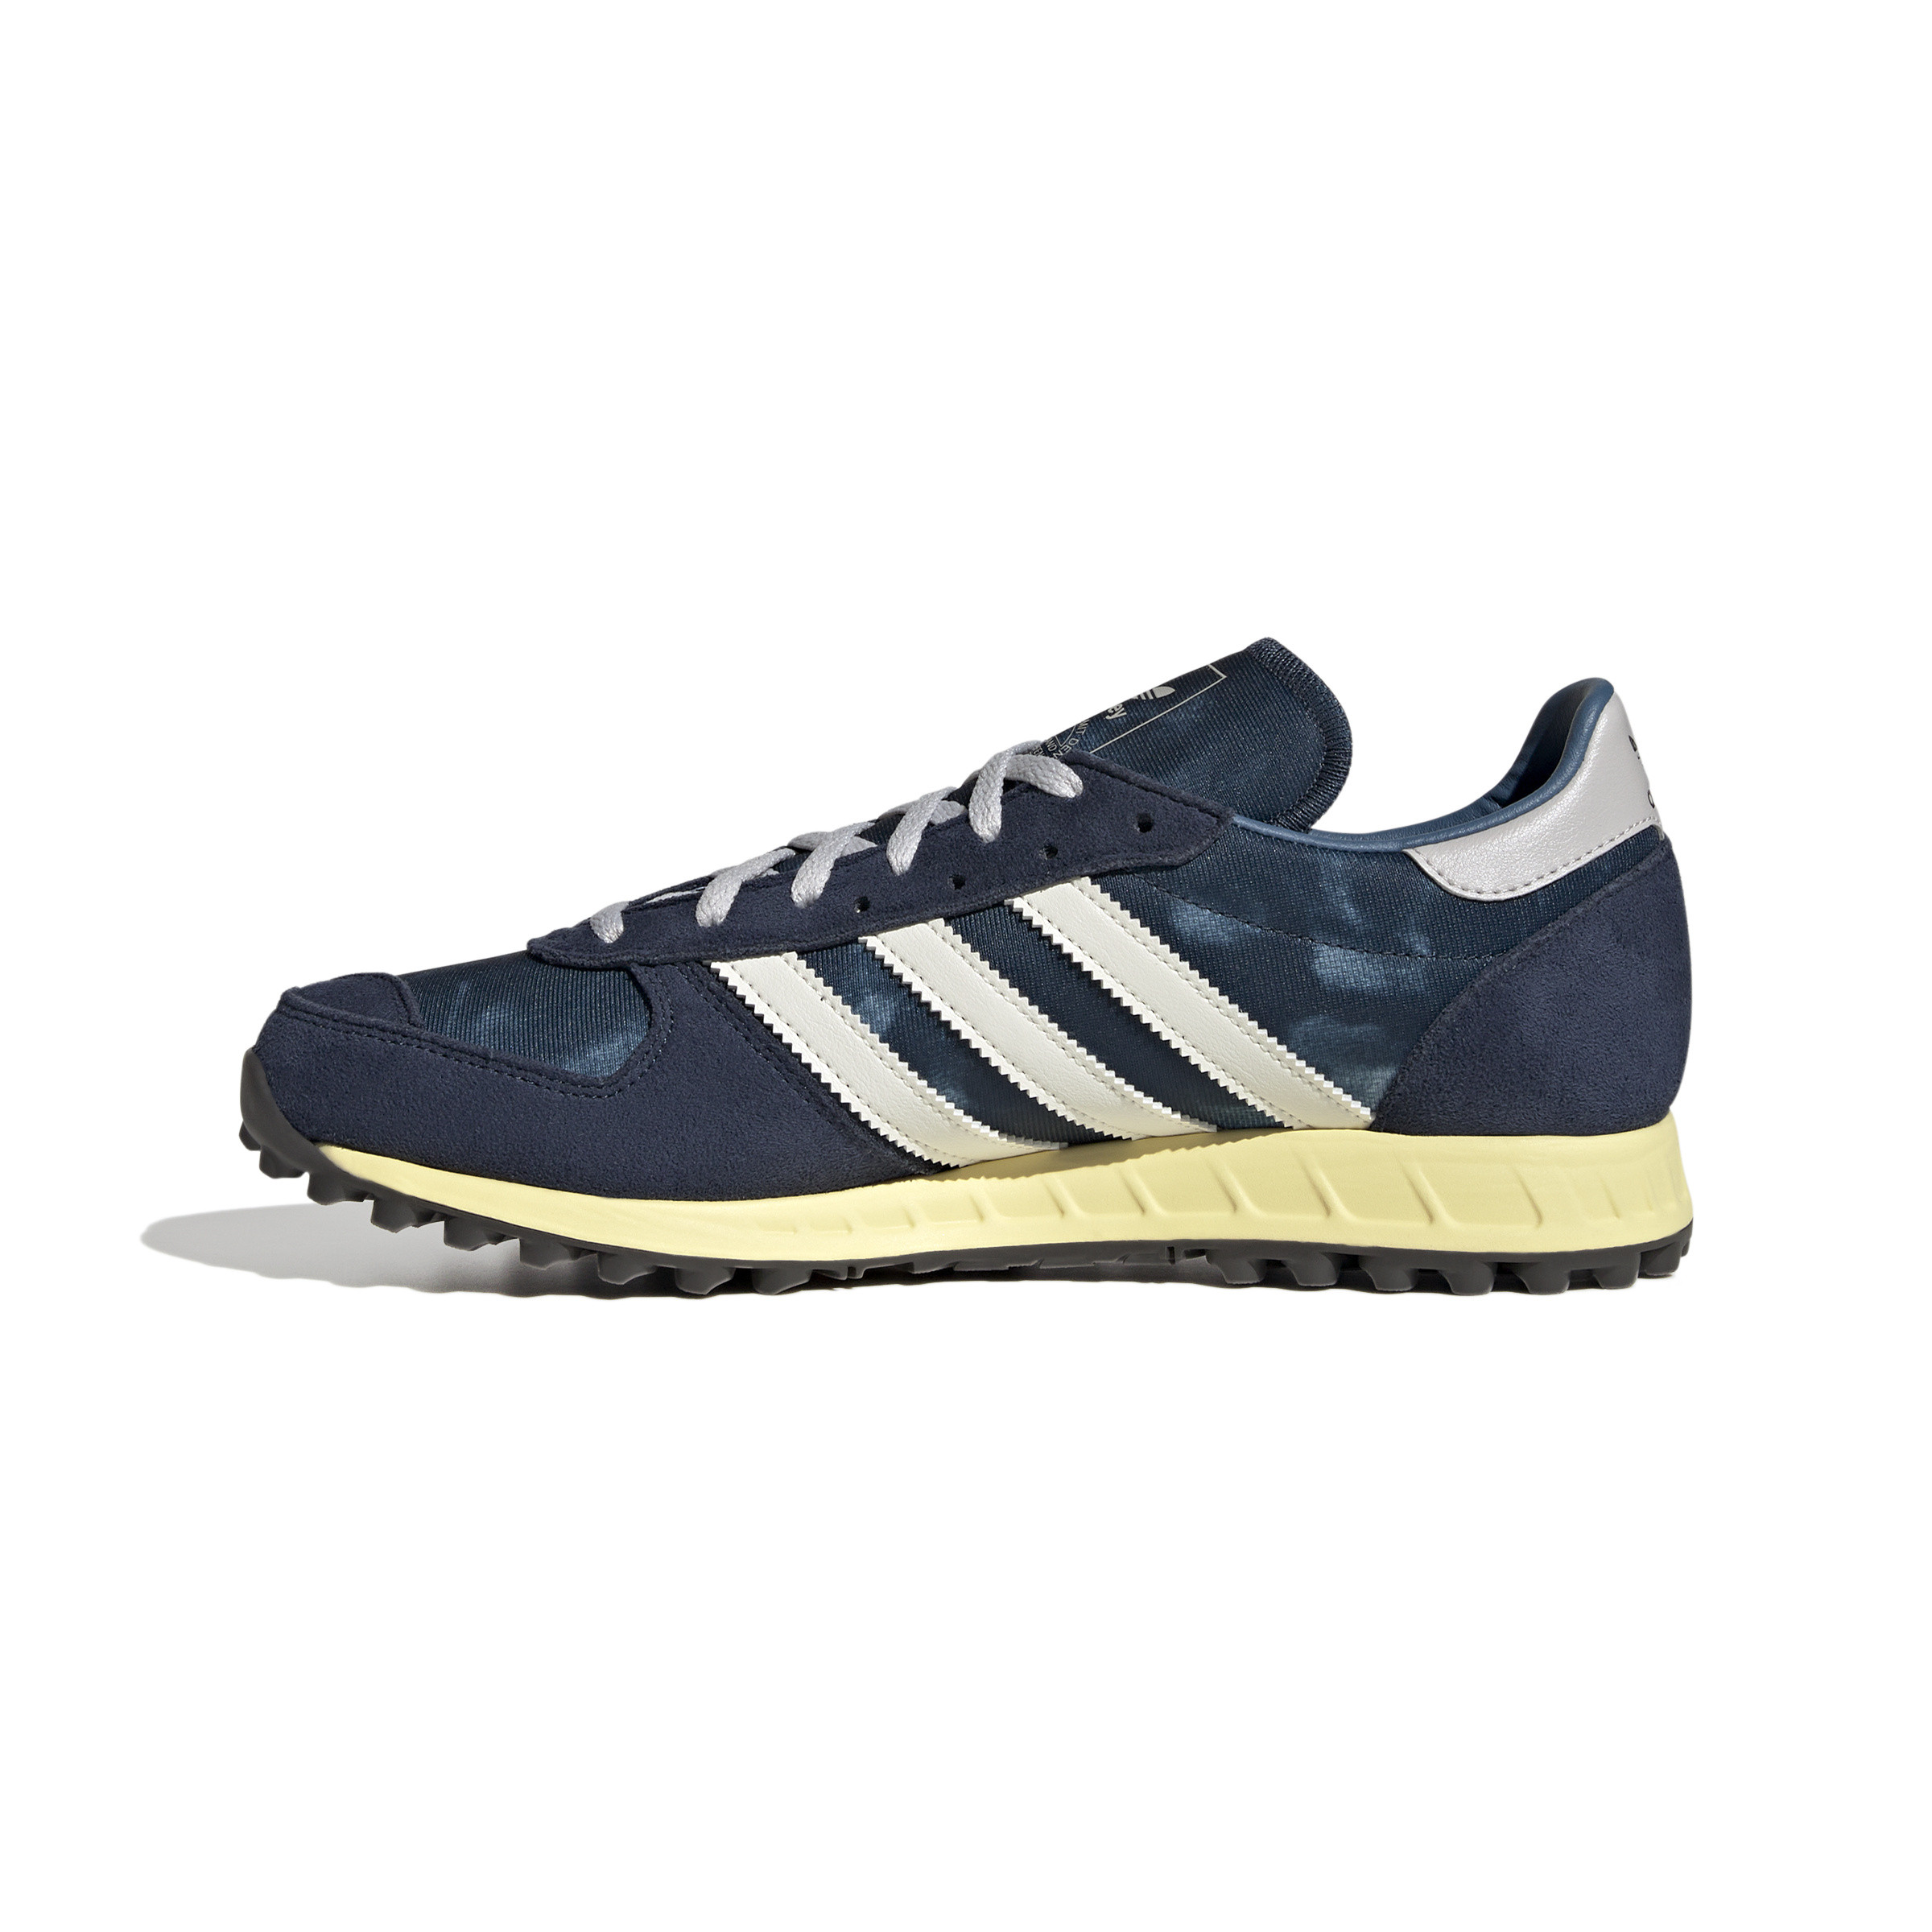 Adidas - Adidas Trx Vintage Shoes, Blue, large image number 3